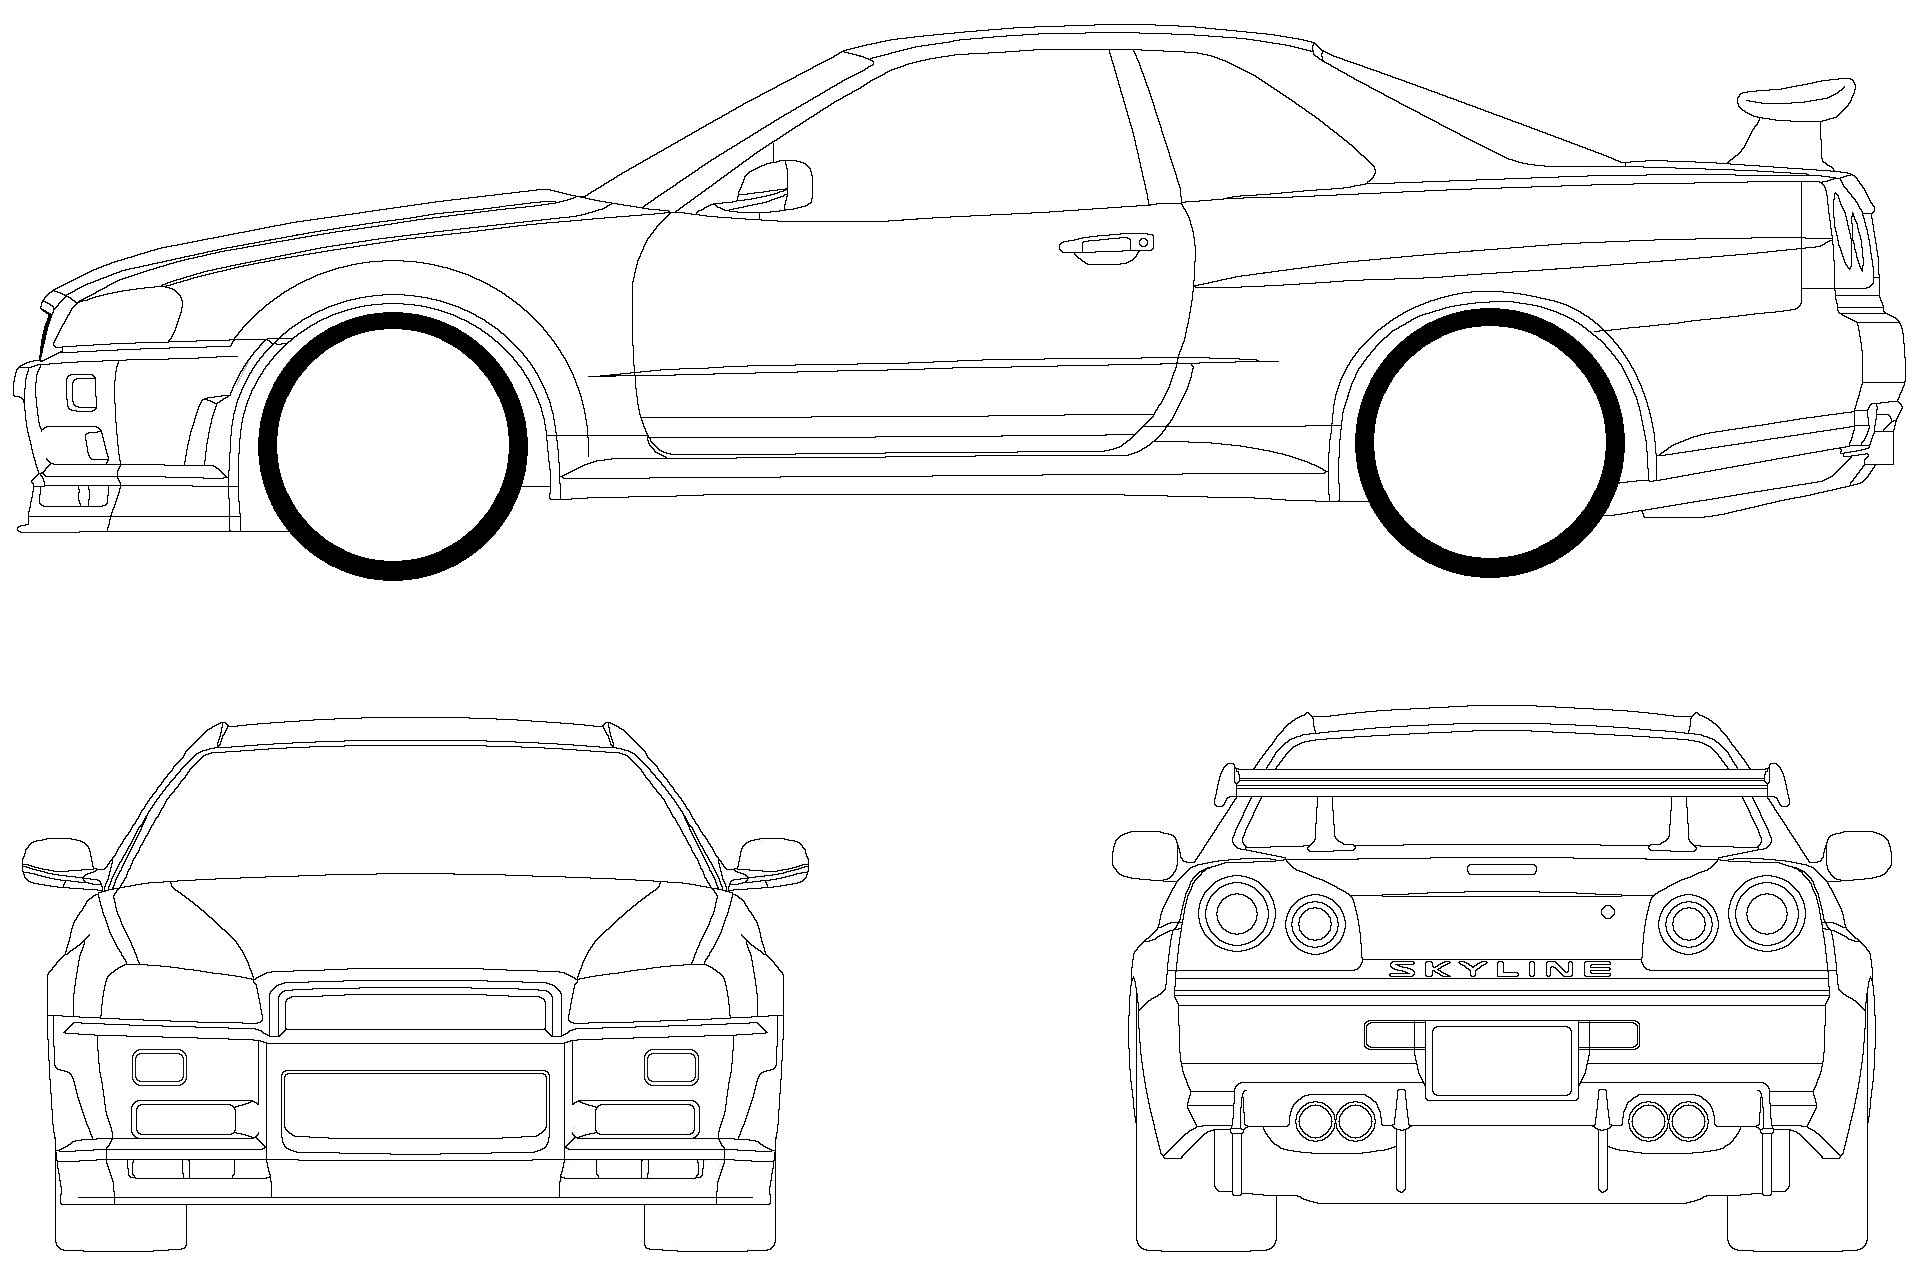 Nissan skyline gtr blueprints